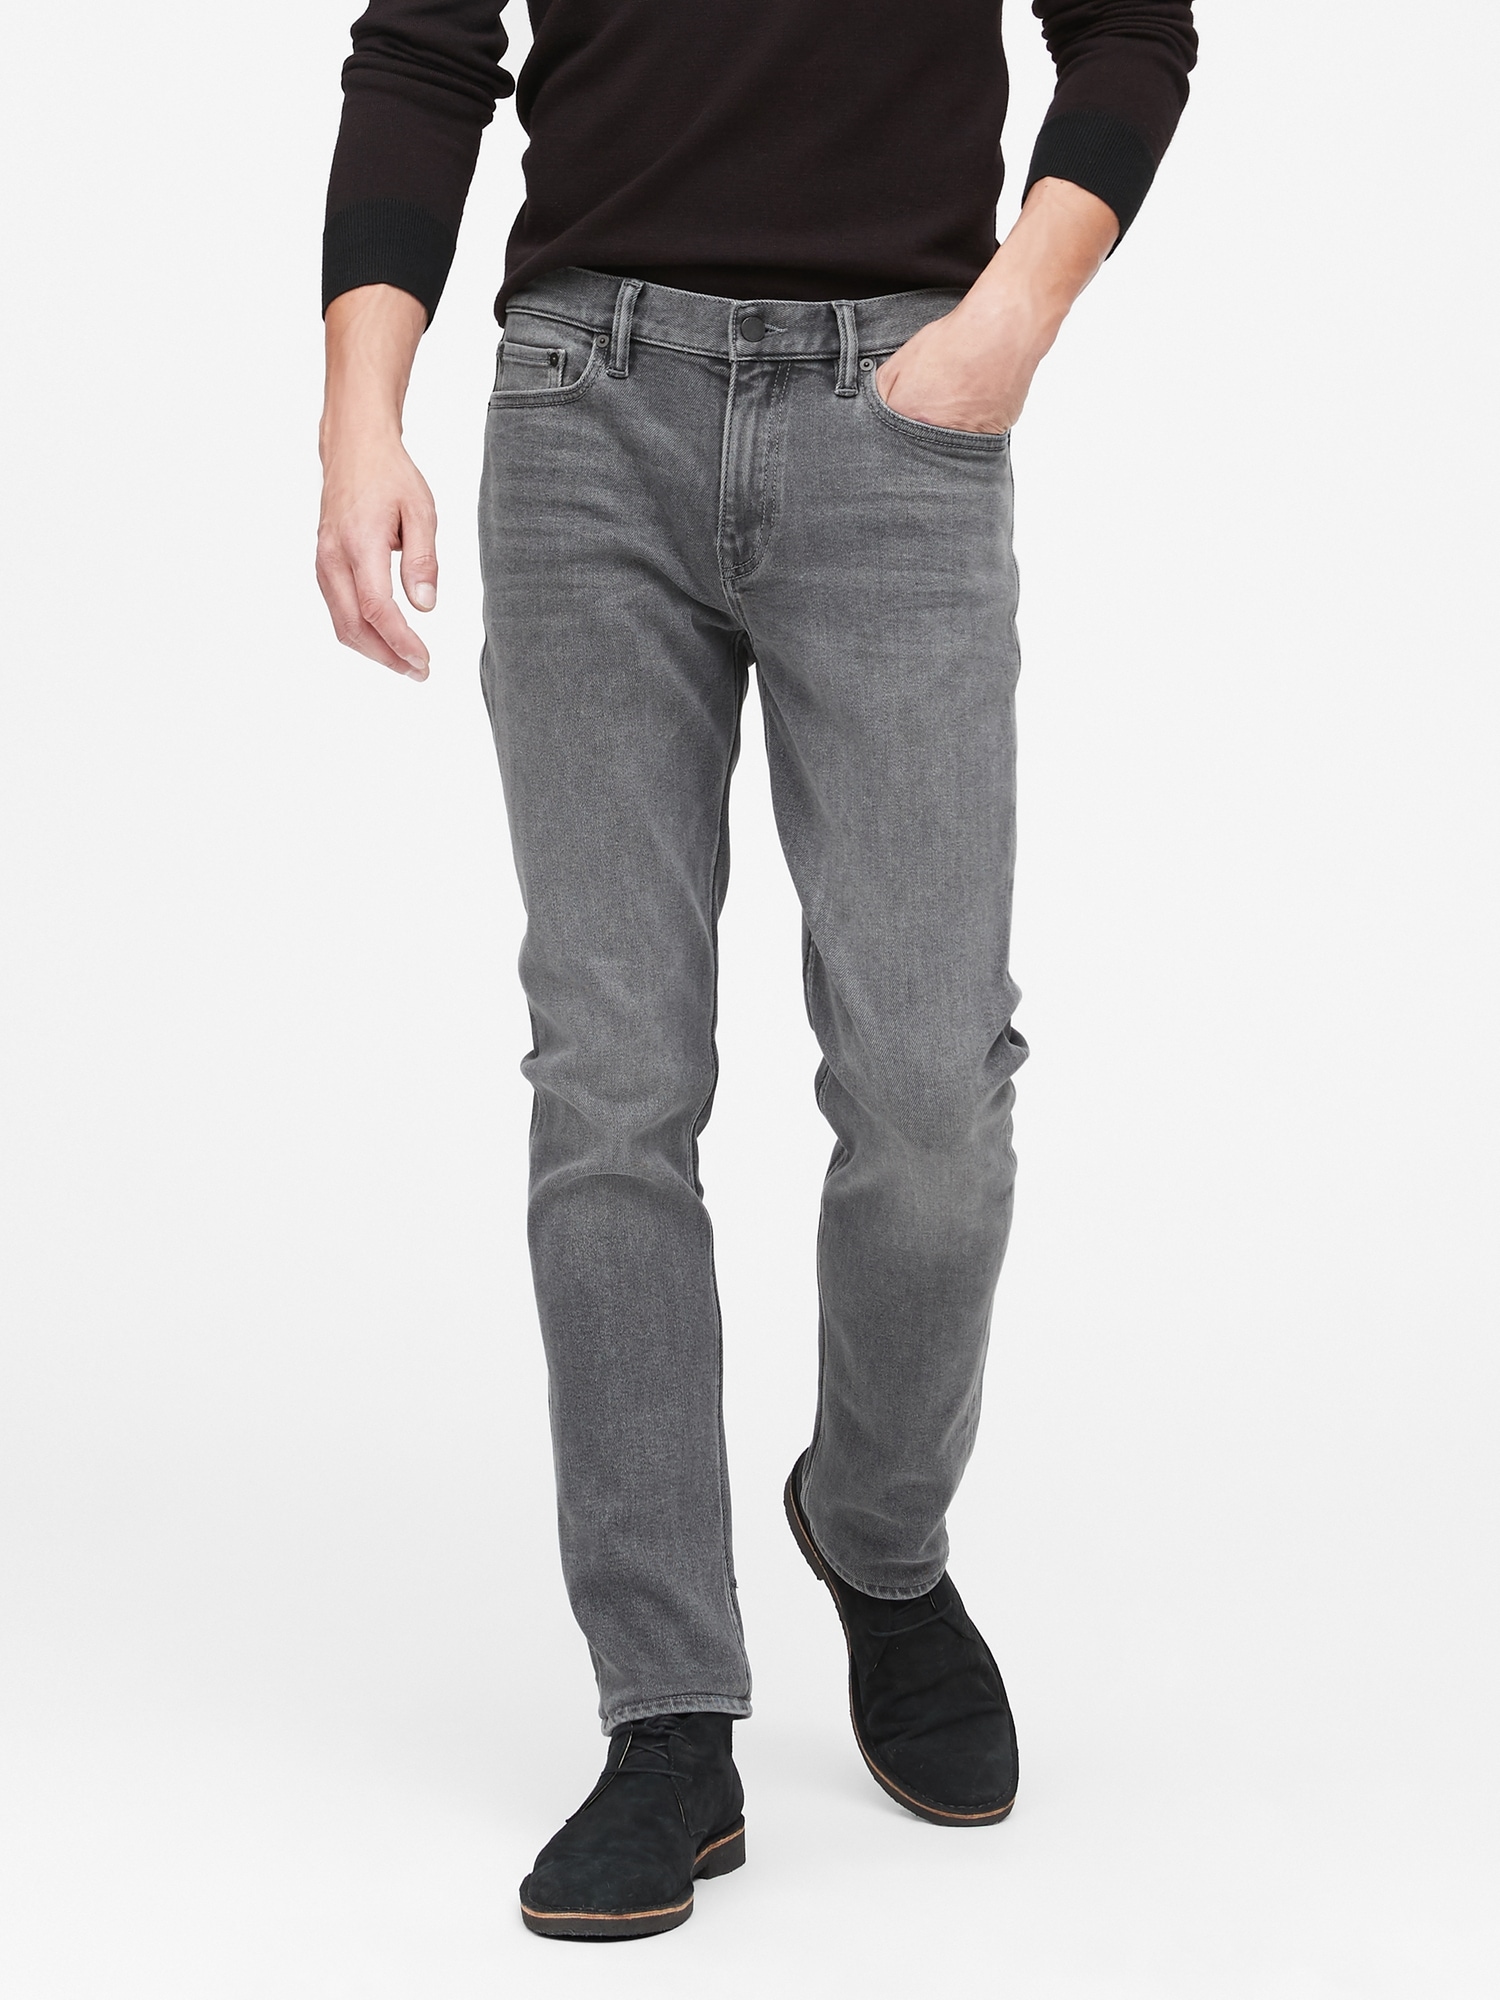 gray slim jeans